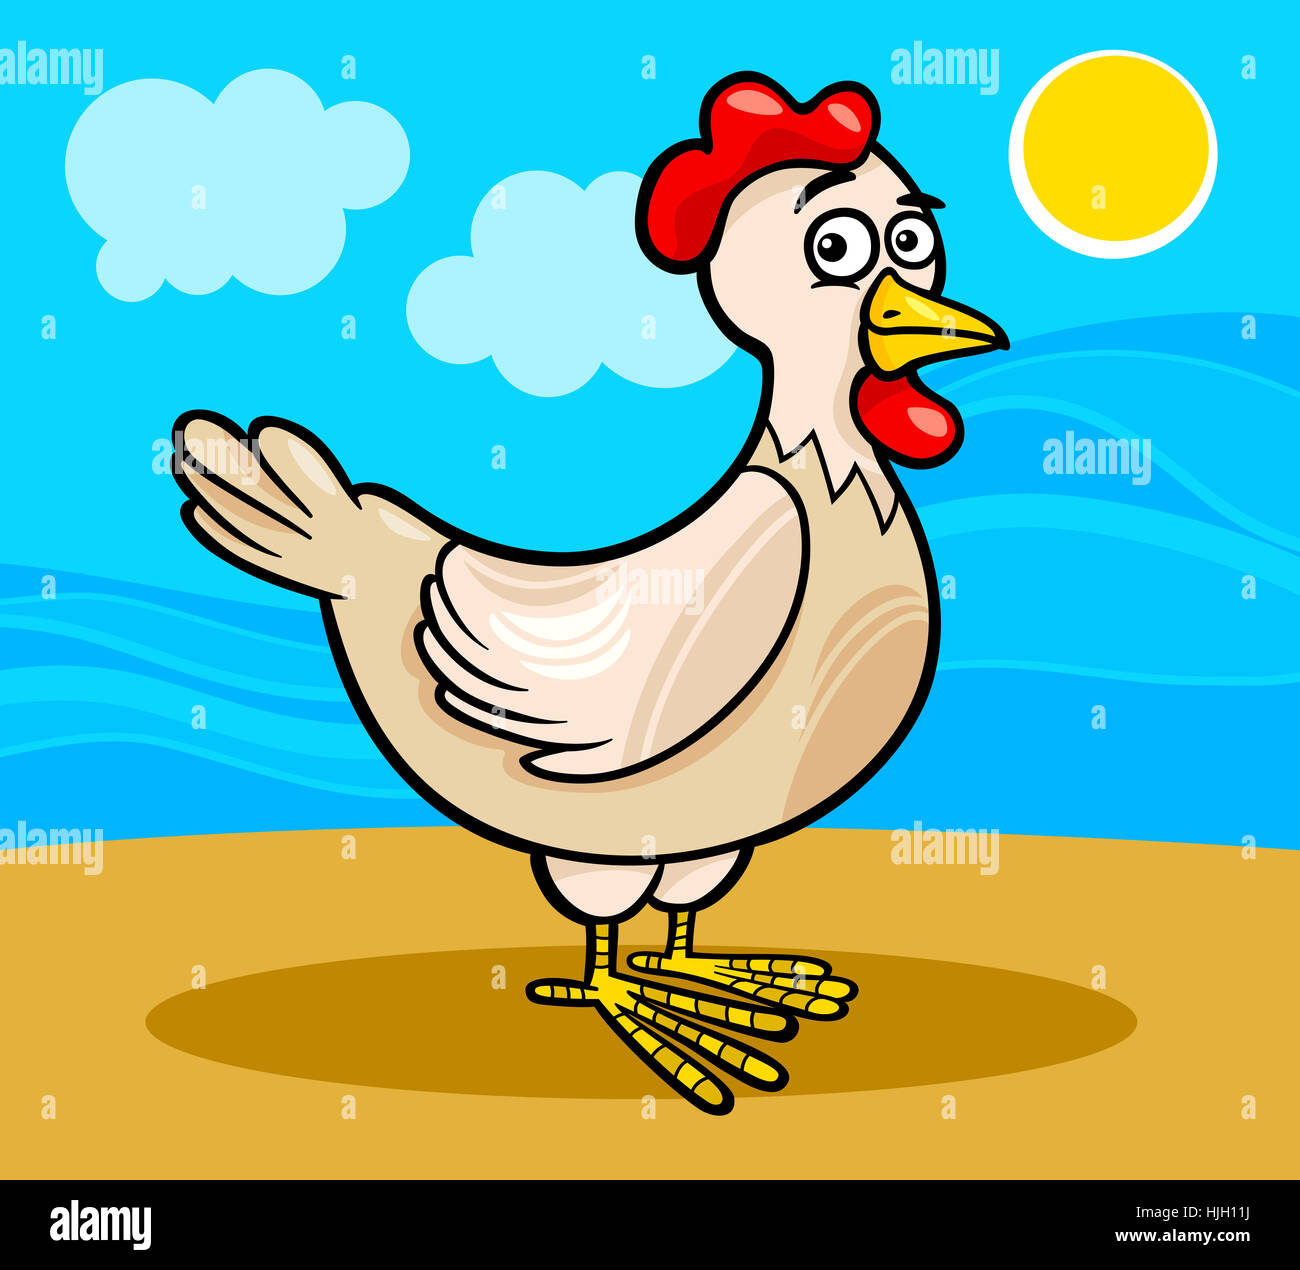 animal, bird, illustration, farm, character, chicken, hen, cartoon, laugh  Stock Photo - Alamy